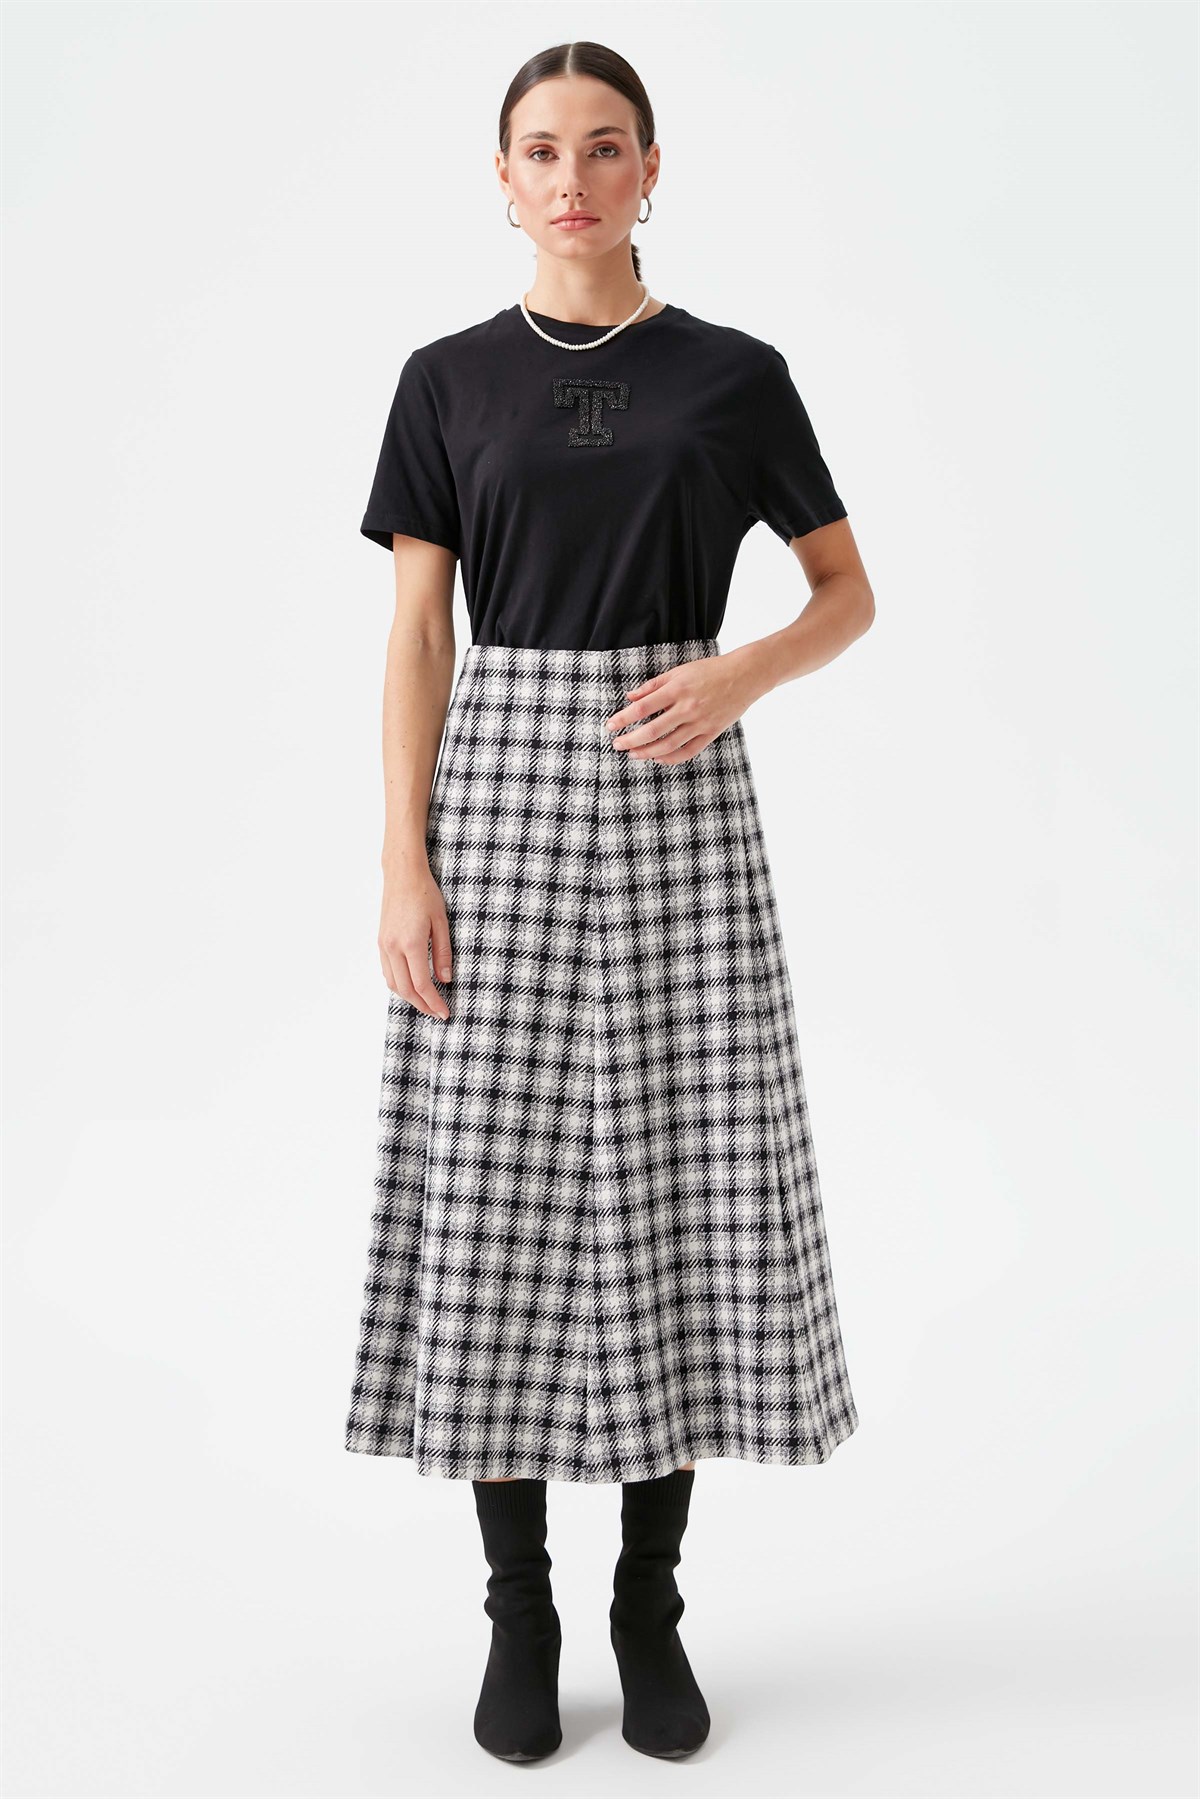 Six Piece Plaid Skirt - Black